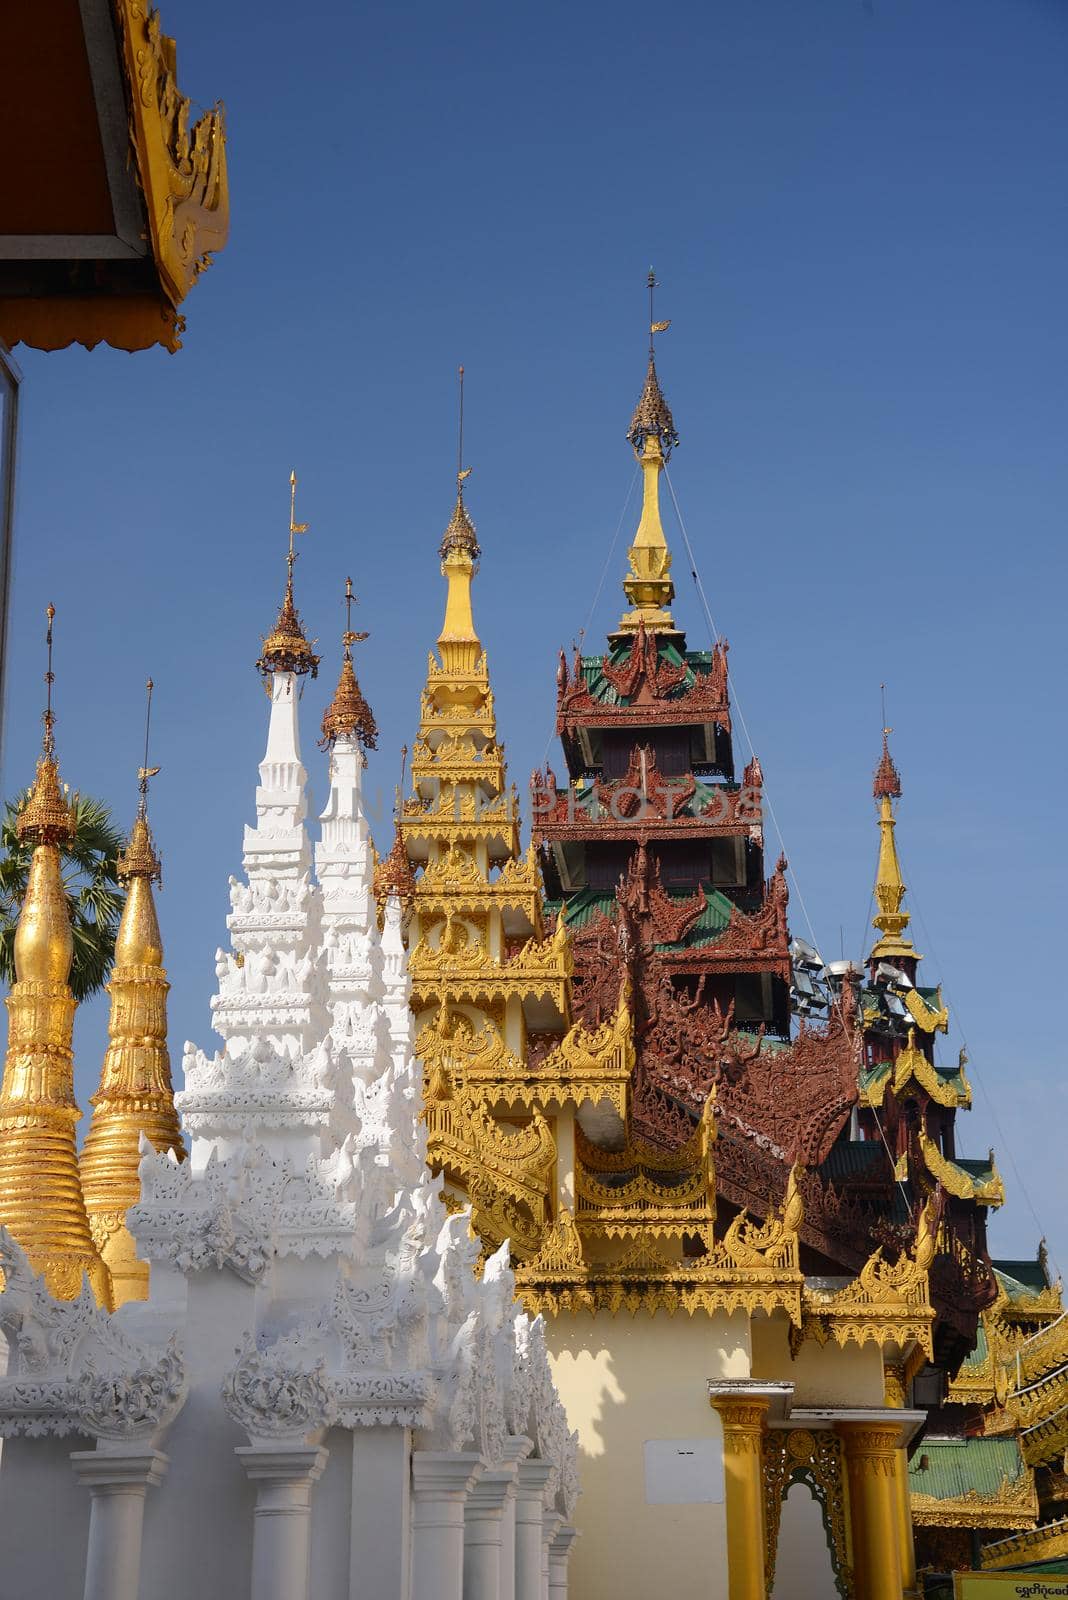 mid day of golden shwedagon in myanmar